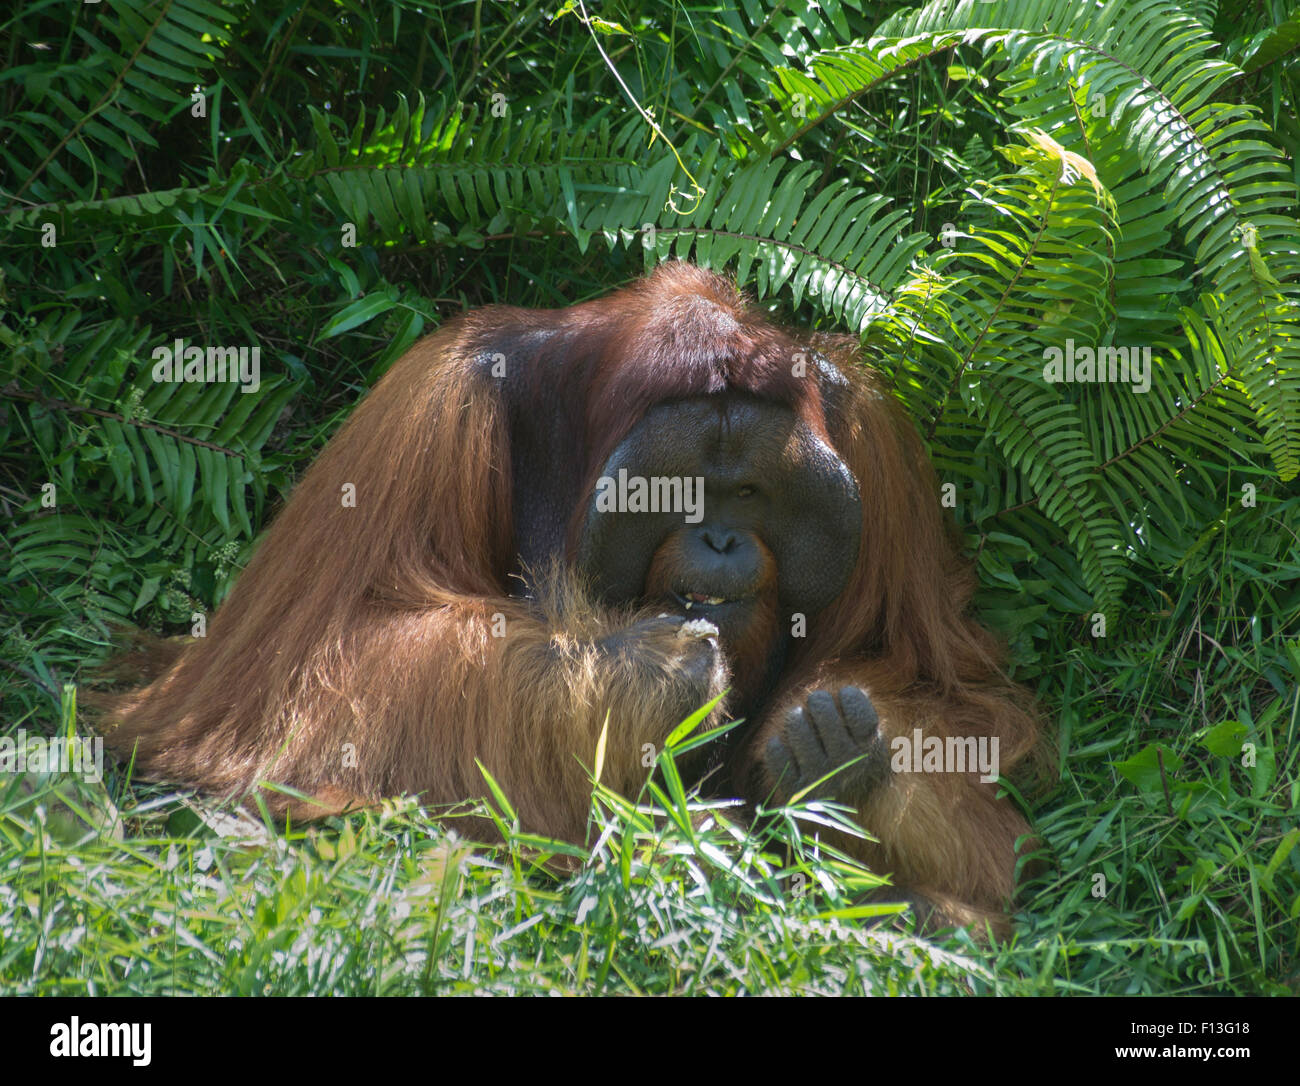 Maschio flangiato Bornean orangutan Foto Stock